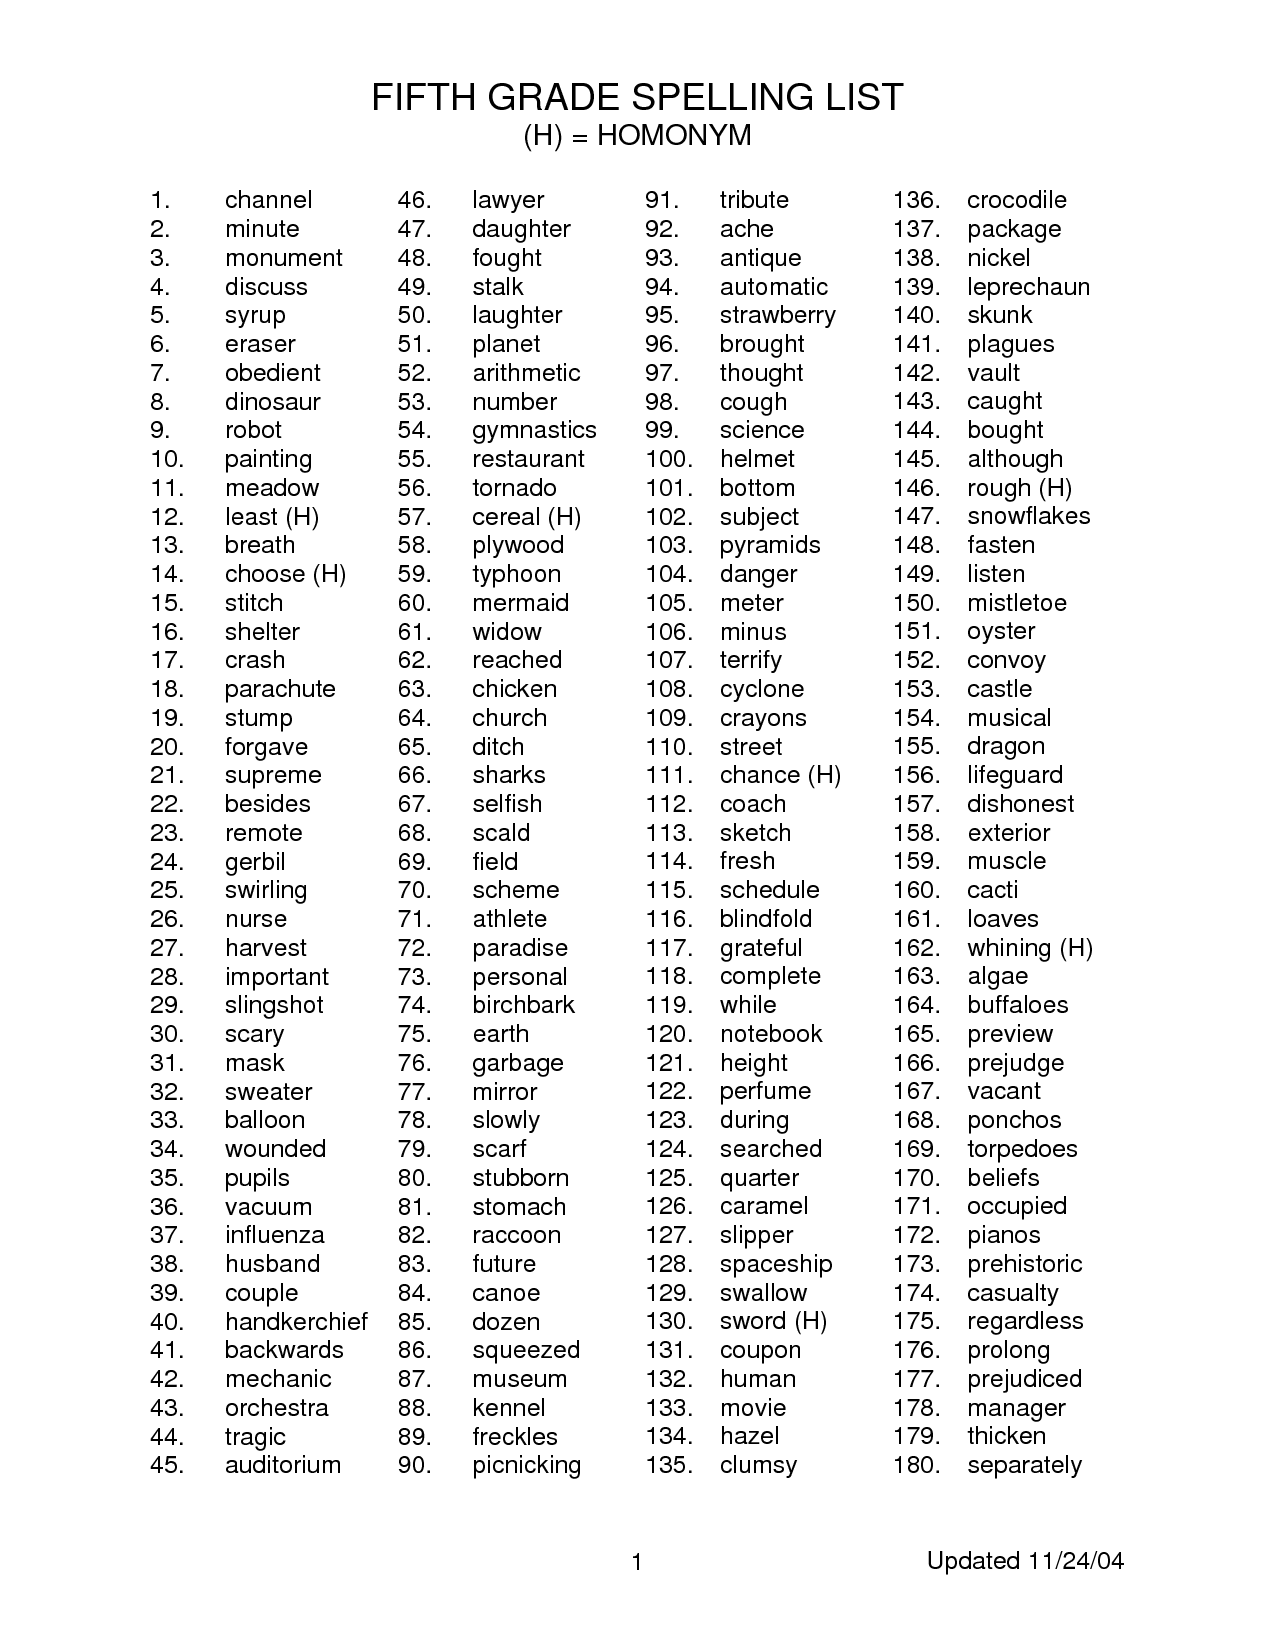 5th Grade Spelling Word List Image